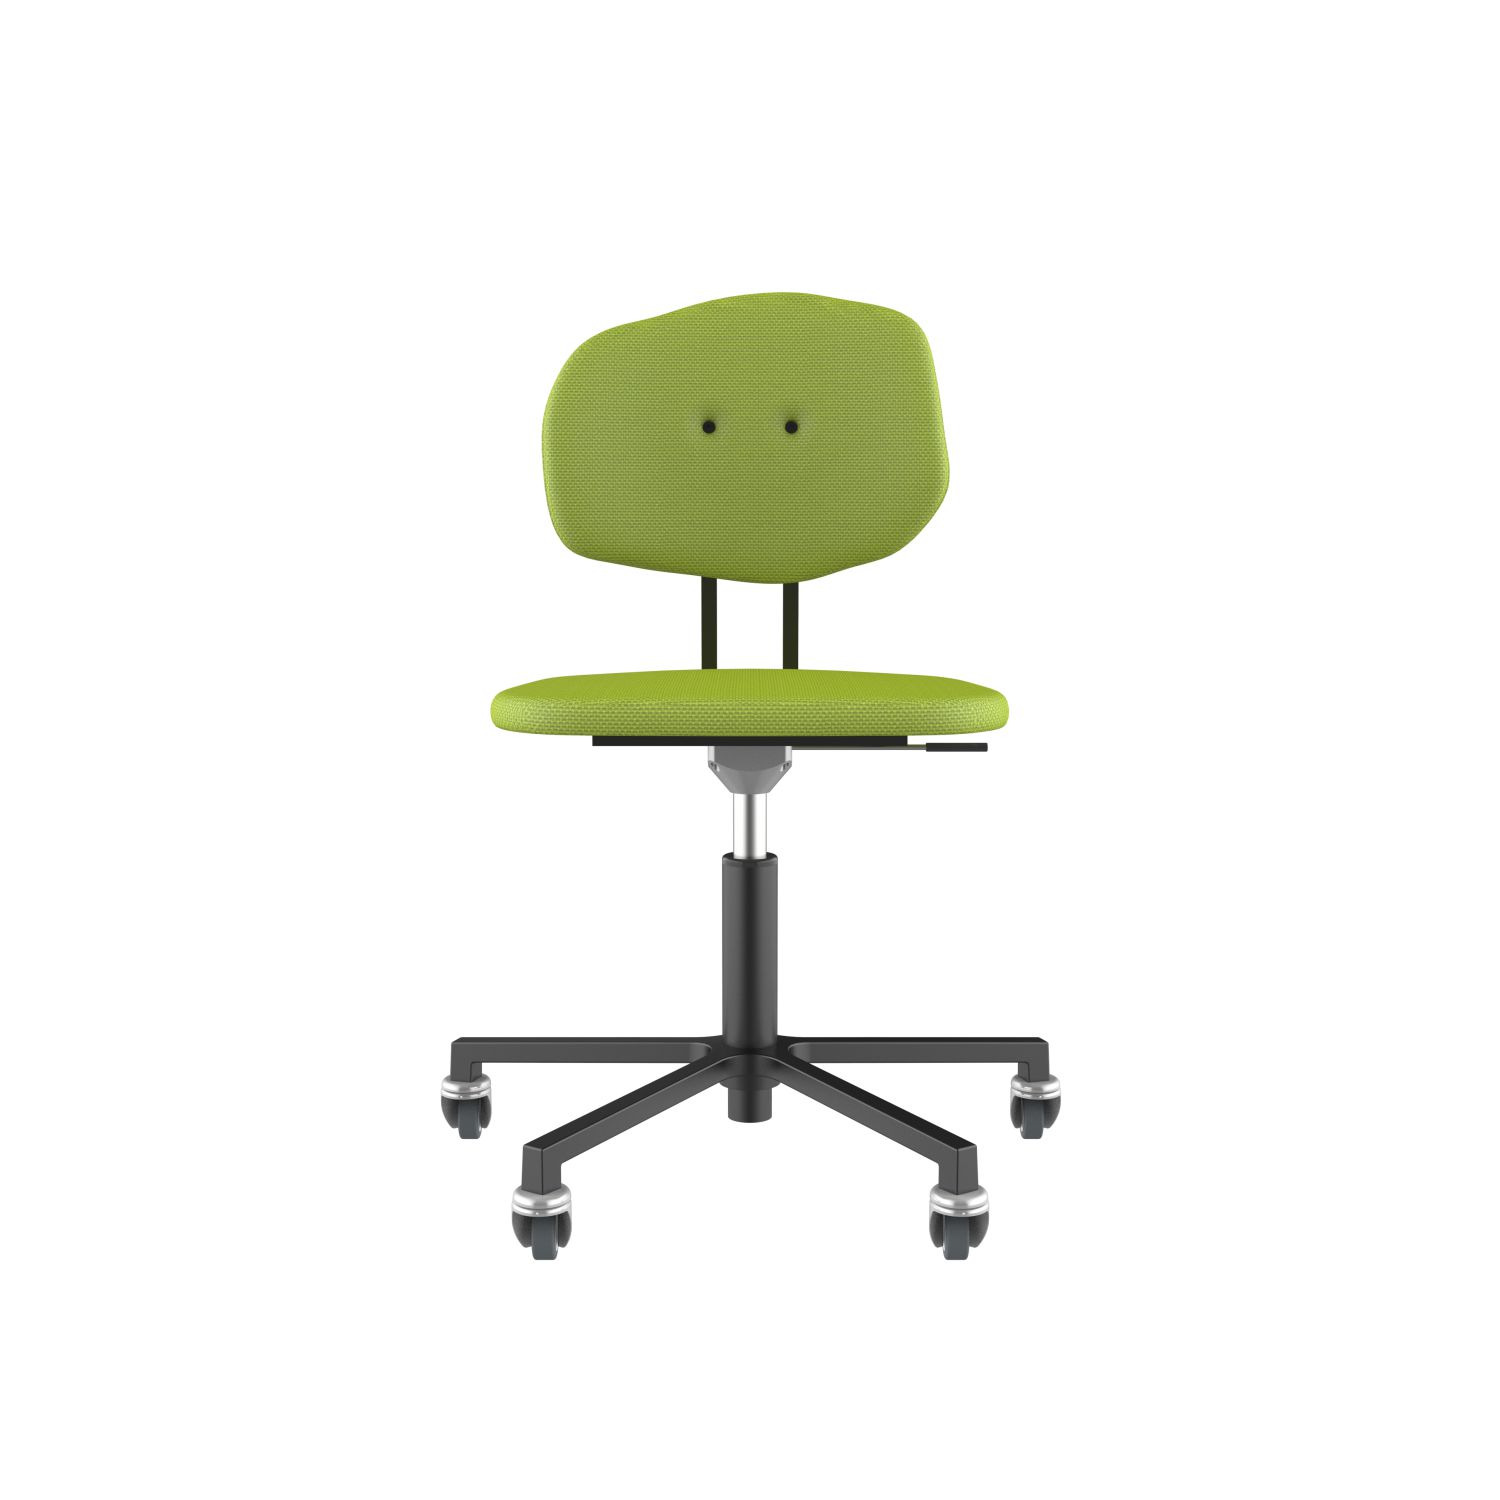 lensvelt maarten baas office chair without armrests backrest e fairway green 020 black ral9005 soft wheels